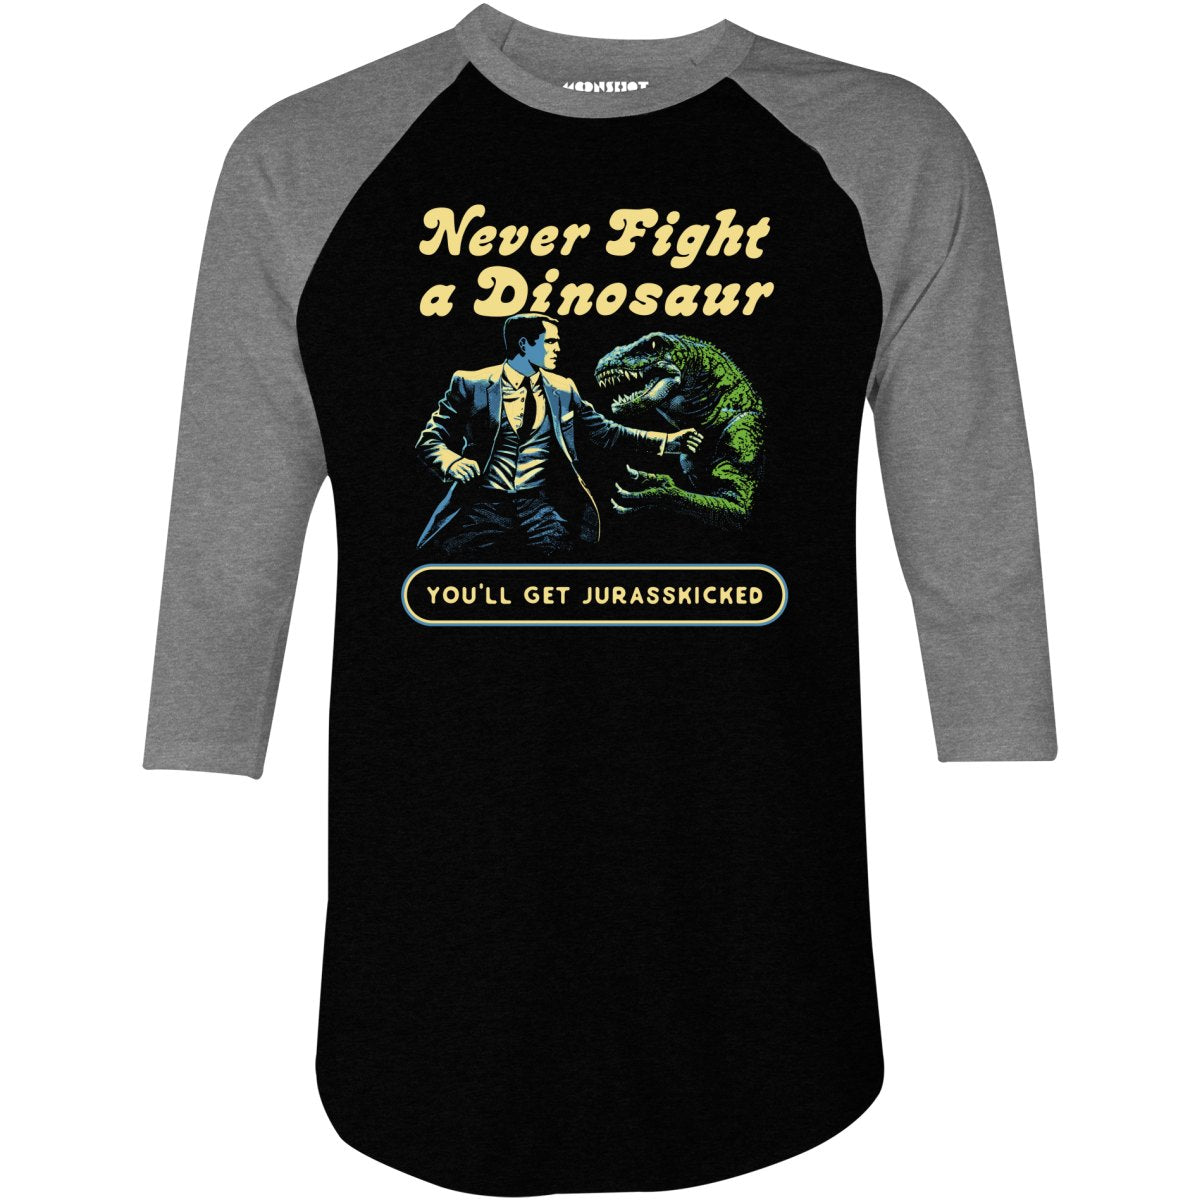 Never Fight a Dinosaur - 3/4 Sleeve Raglan T-Shirt